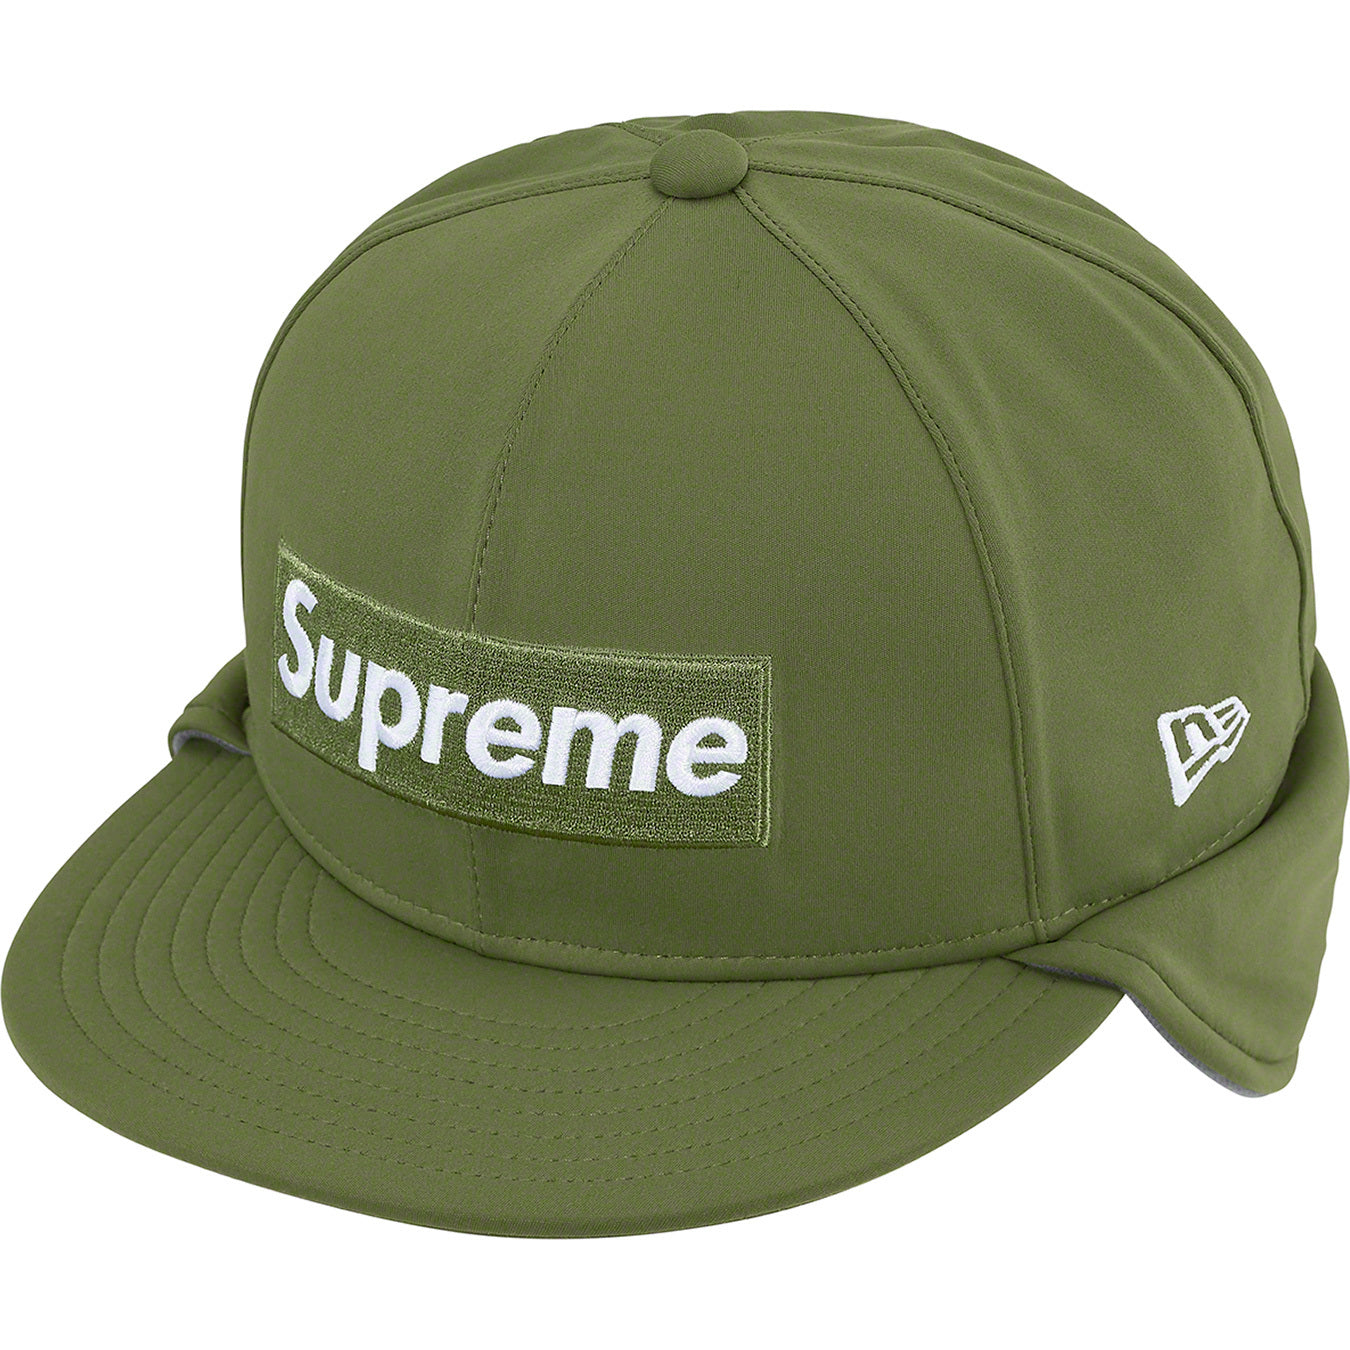 Supreme x New Era Windstopper Earflap Box Logo "Dark Olive"